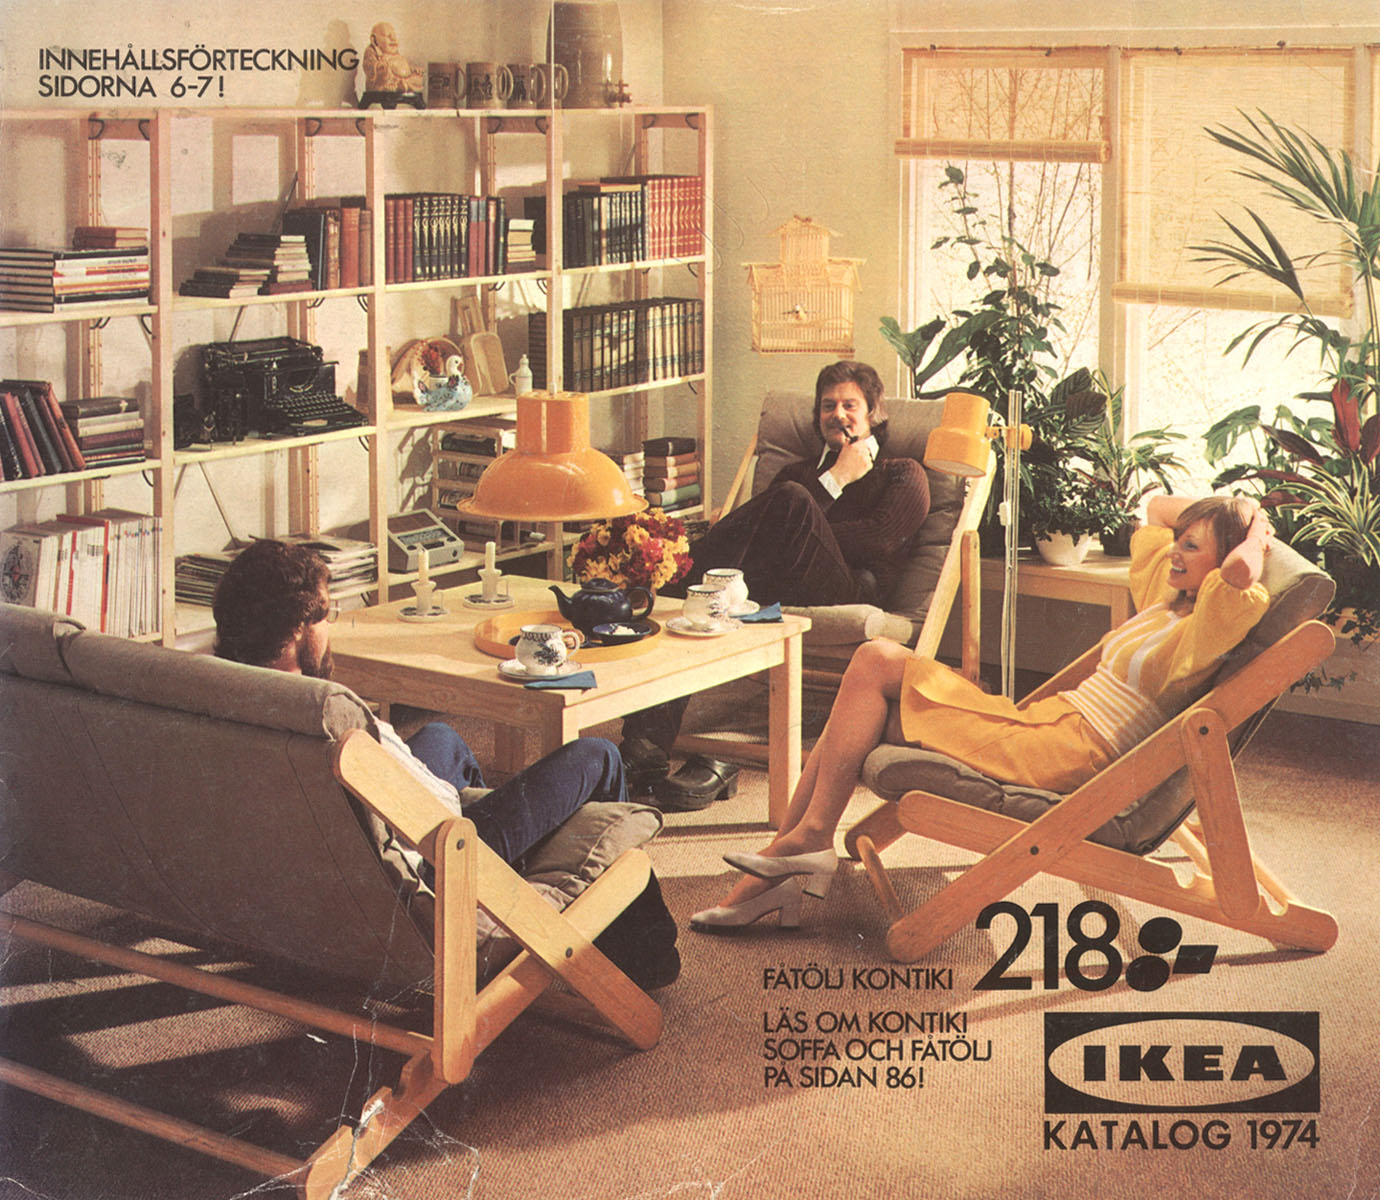 Every IKEA Catalogue Cover Since 1951